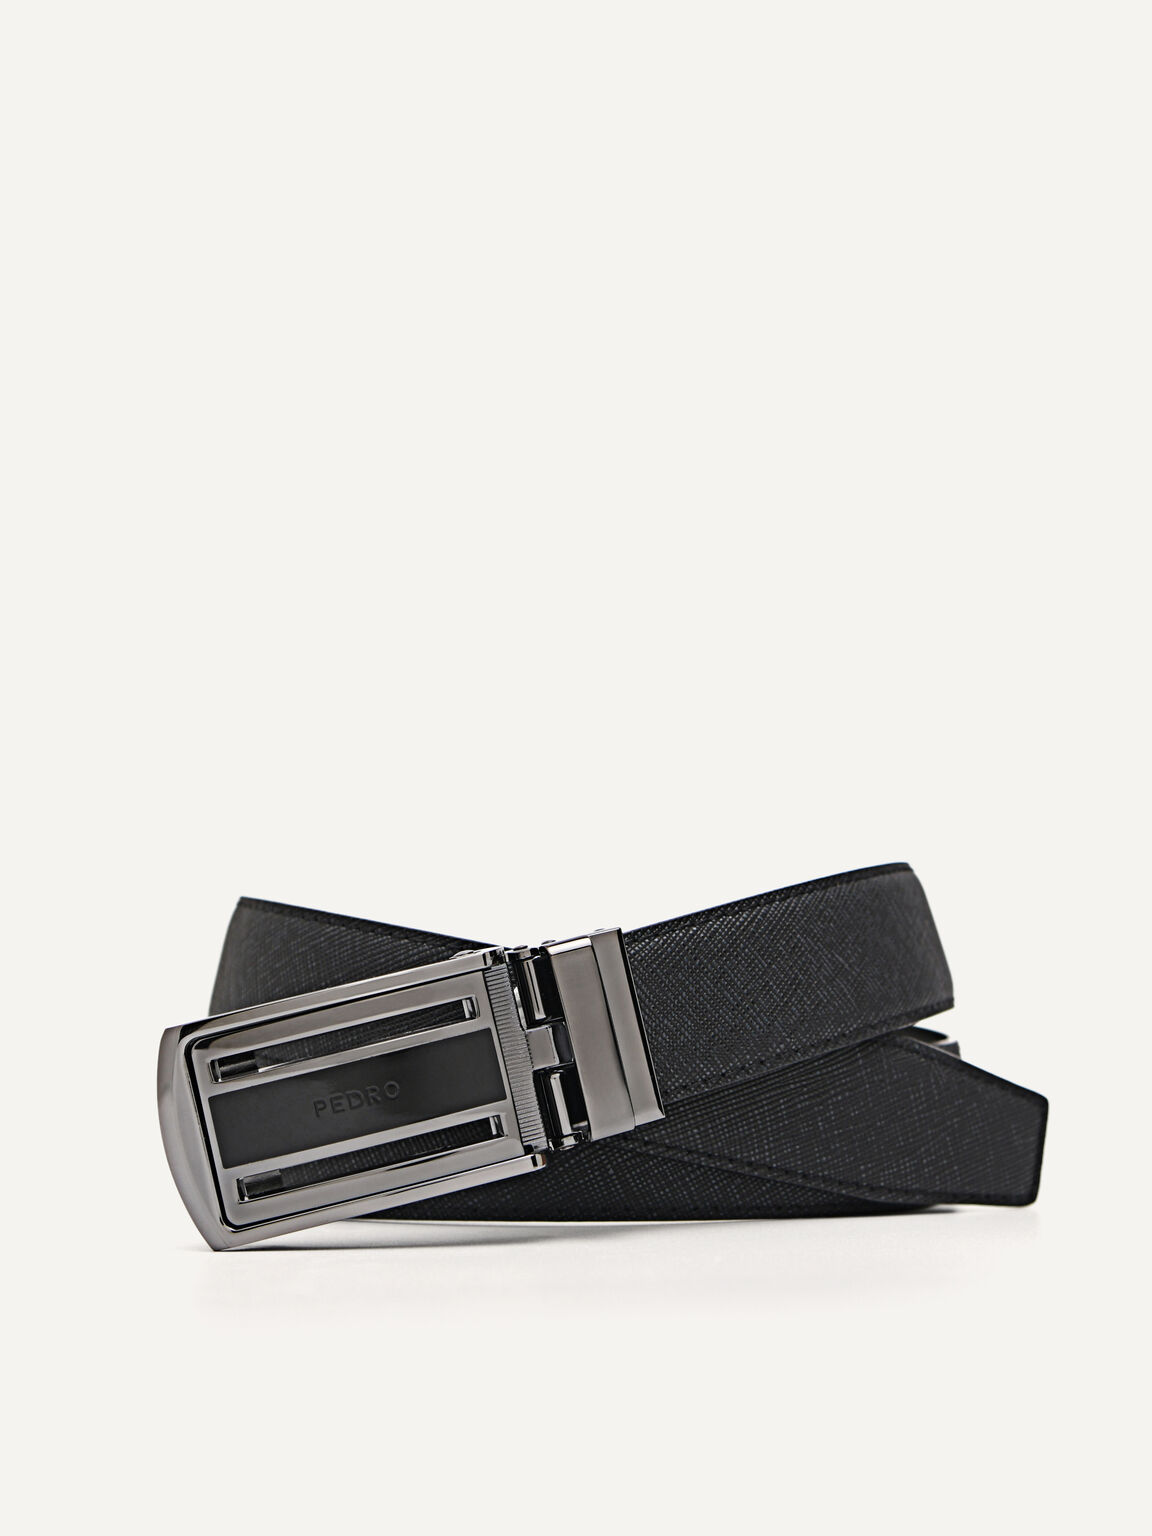 Leather Automatic Belt, Black